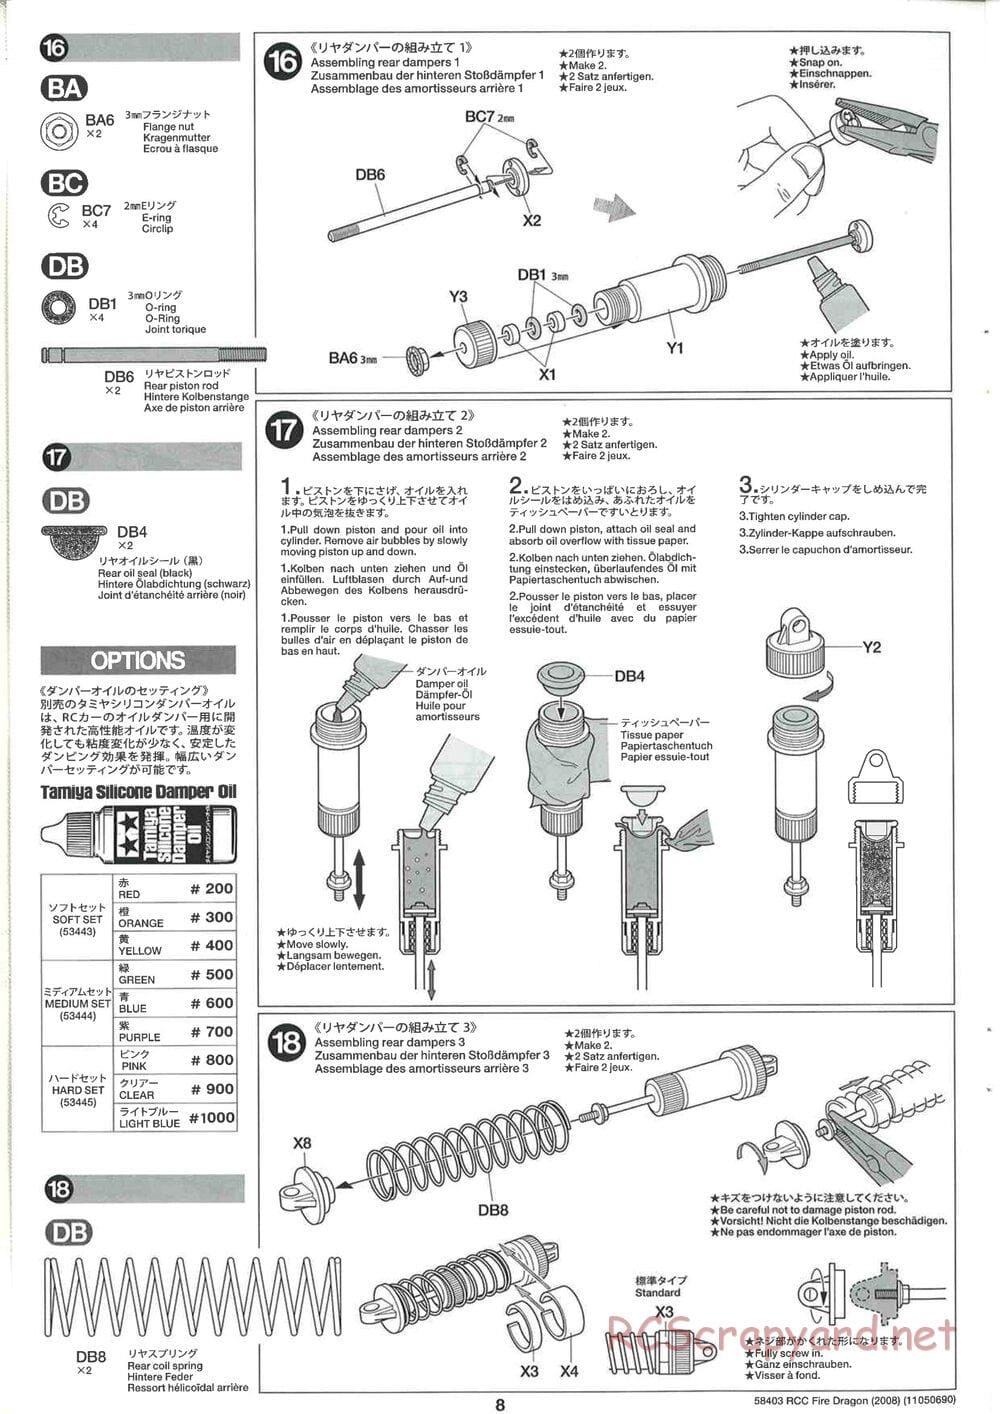 Tamiya - Fire Dragon 2008 - TS2 Chassis - Manual - Page 8